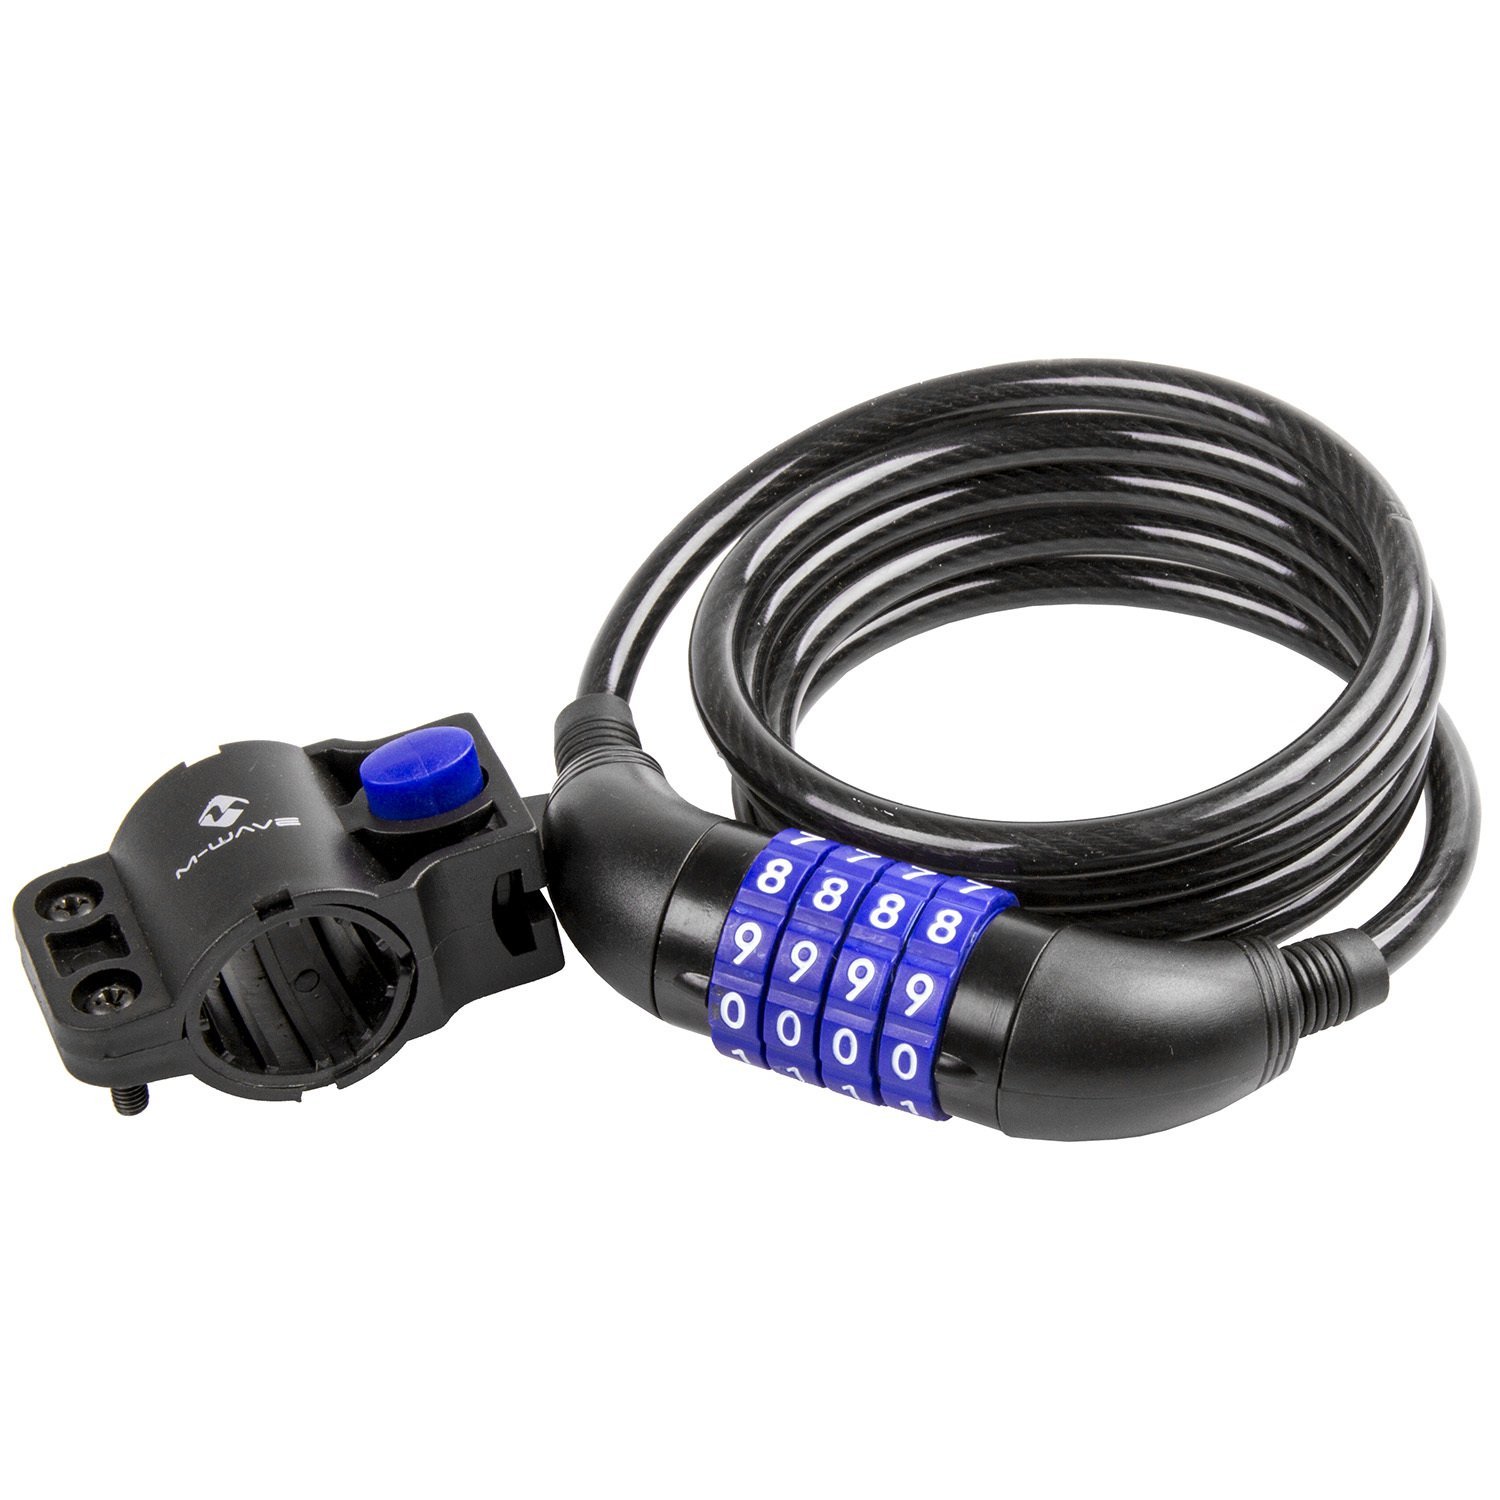 Abus / Cable Locks - 6 Series Racer Key Coil 6415K/120/15 Black Scmu